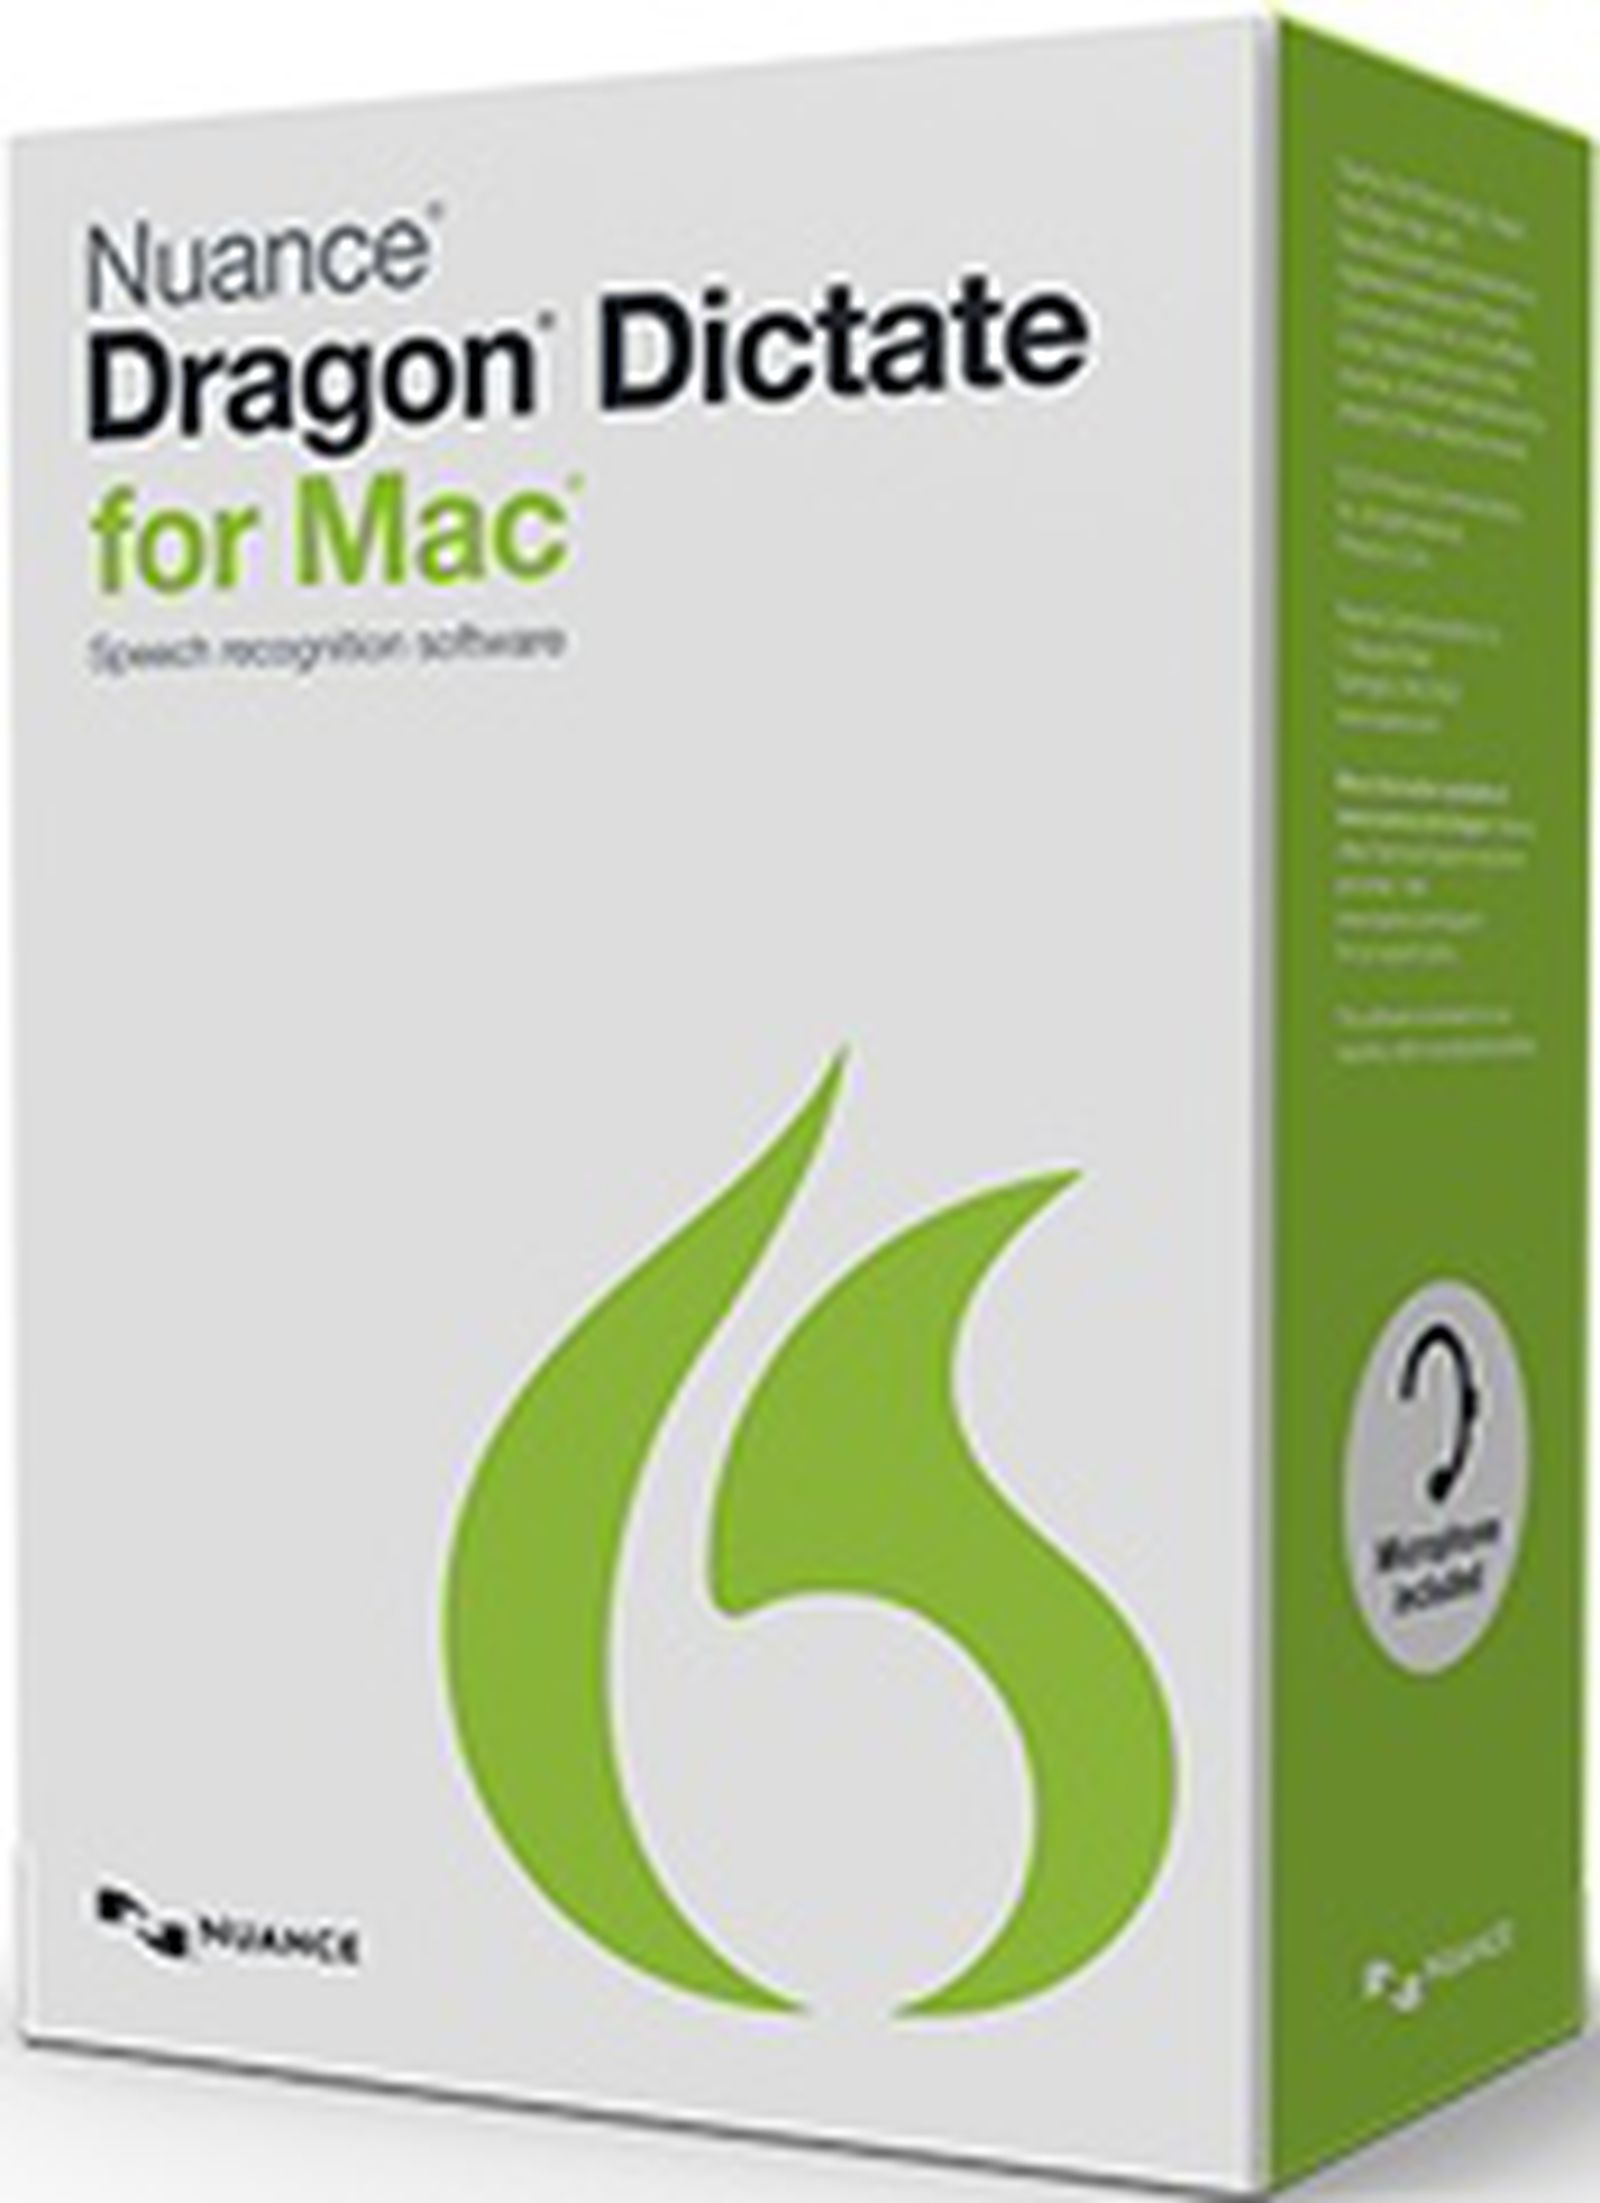 dragon dictation on mac